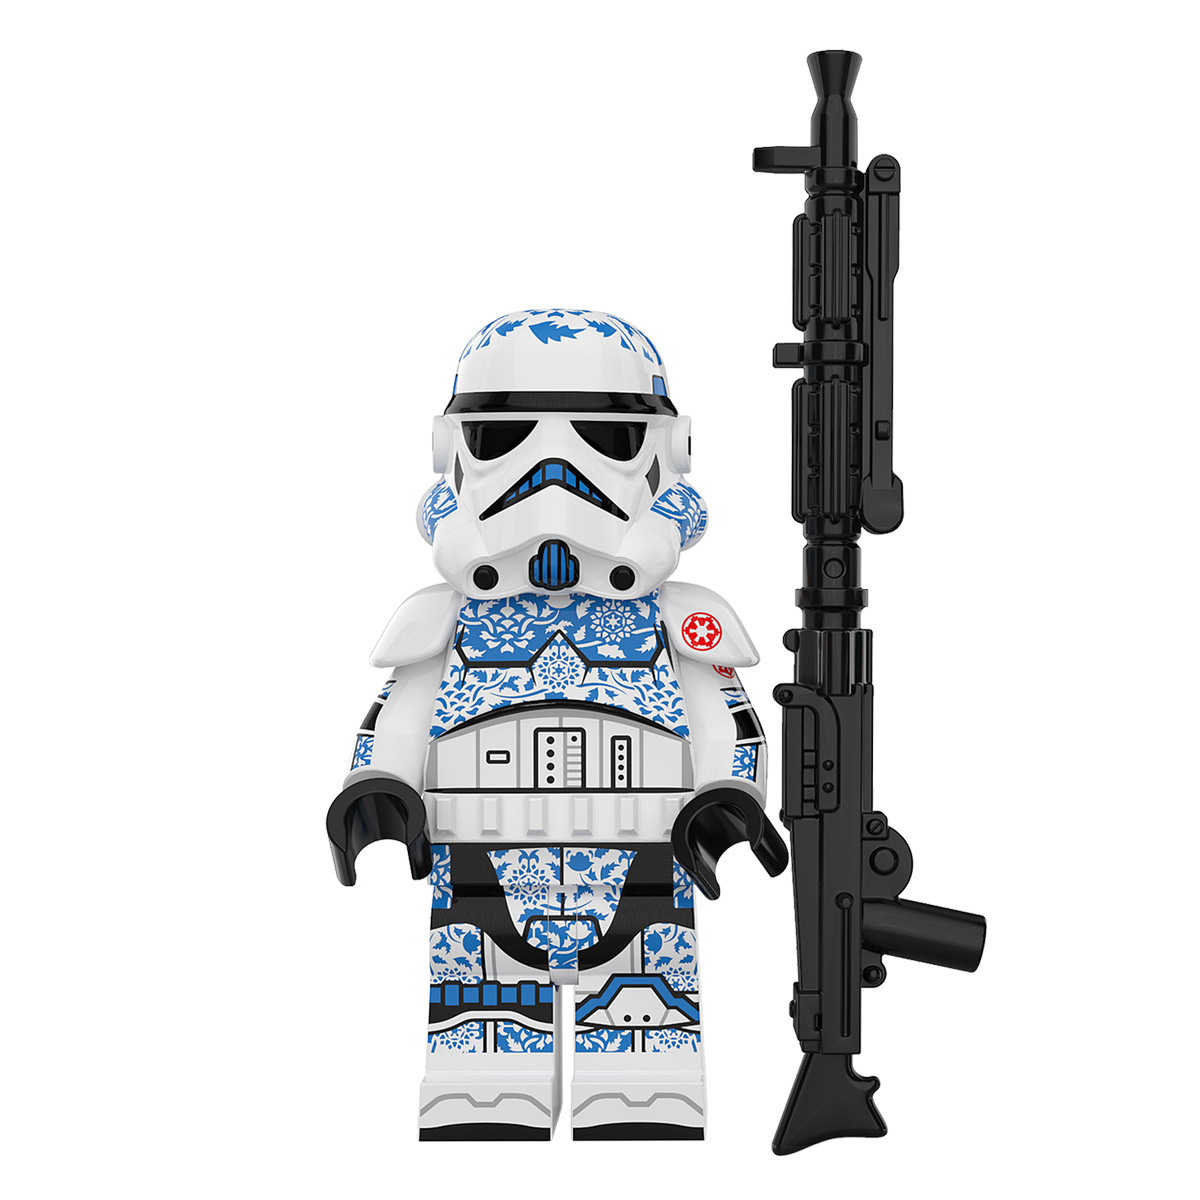 1pcs Star Wars Stormtrooper Pattern Version Minifigure Building Blocks Toys